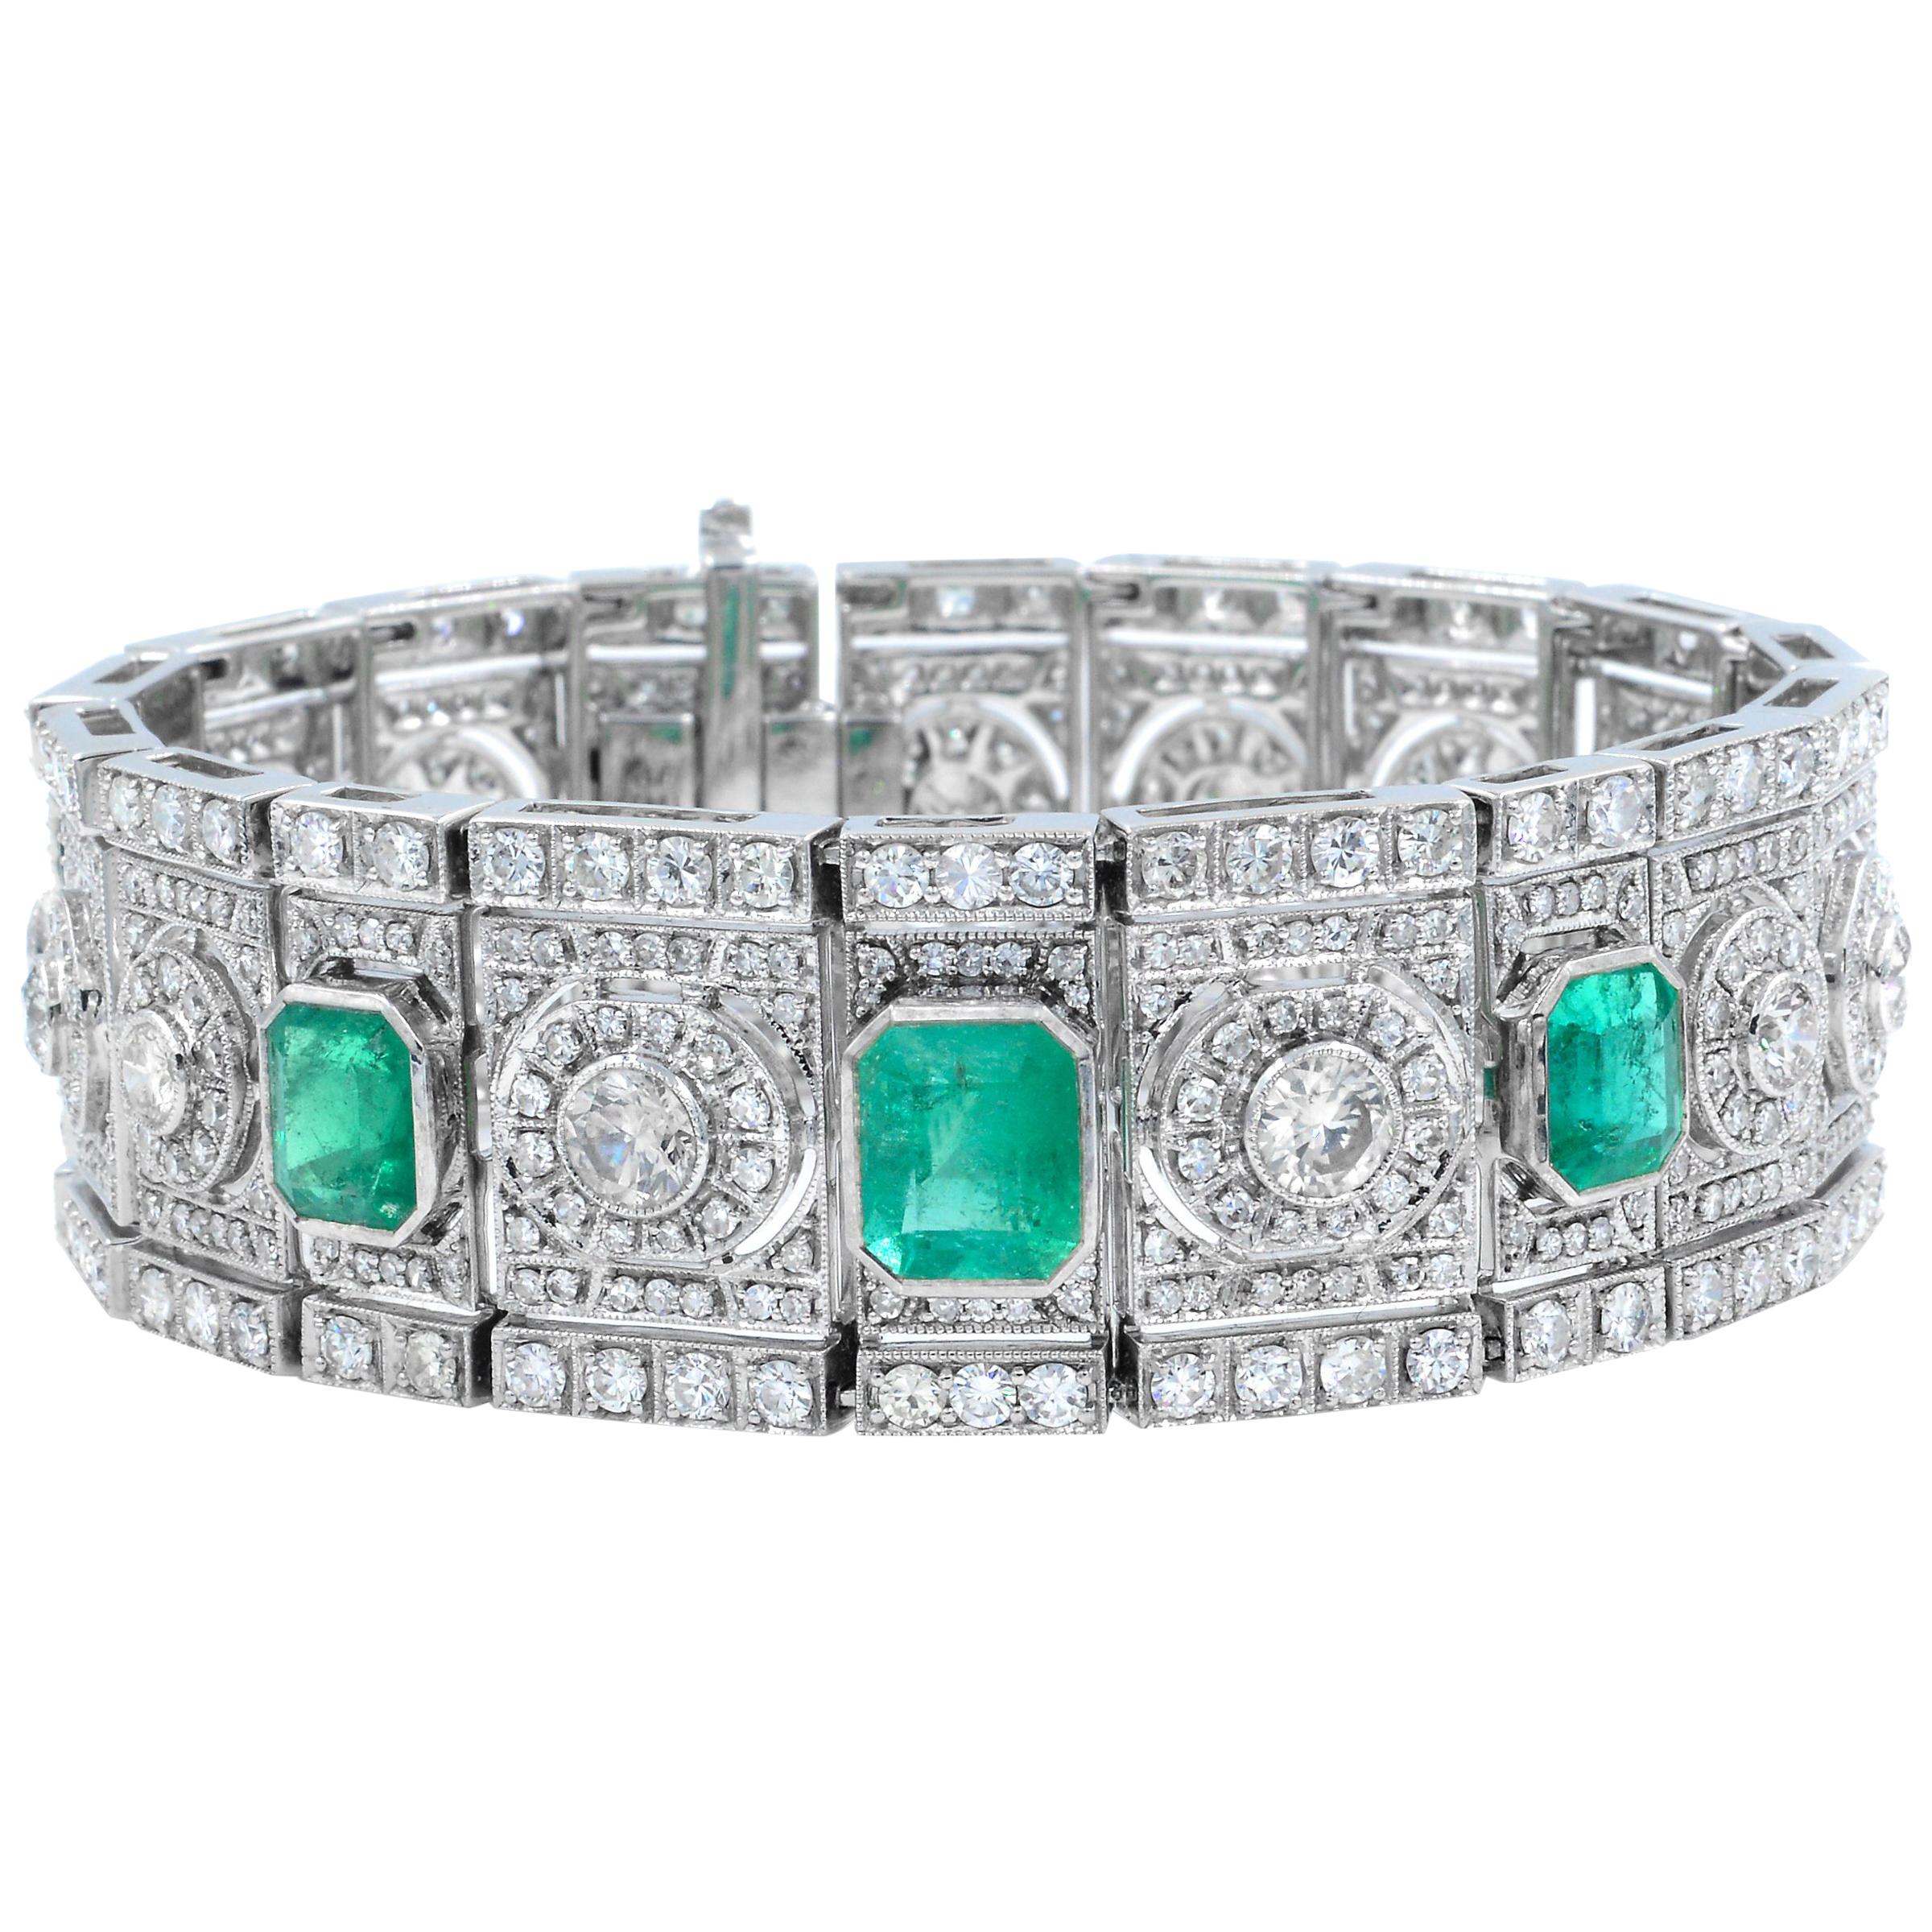 Art Deco Emerald and Diamond Wide Bracelet in 18 Karat White Gold